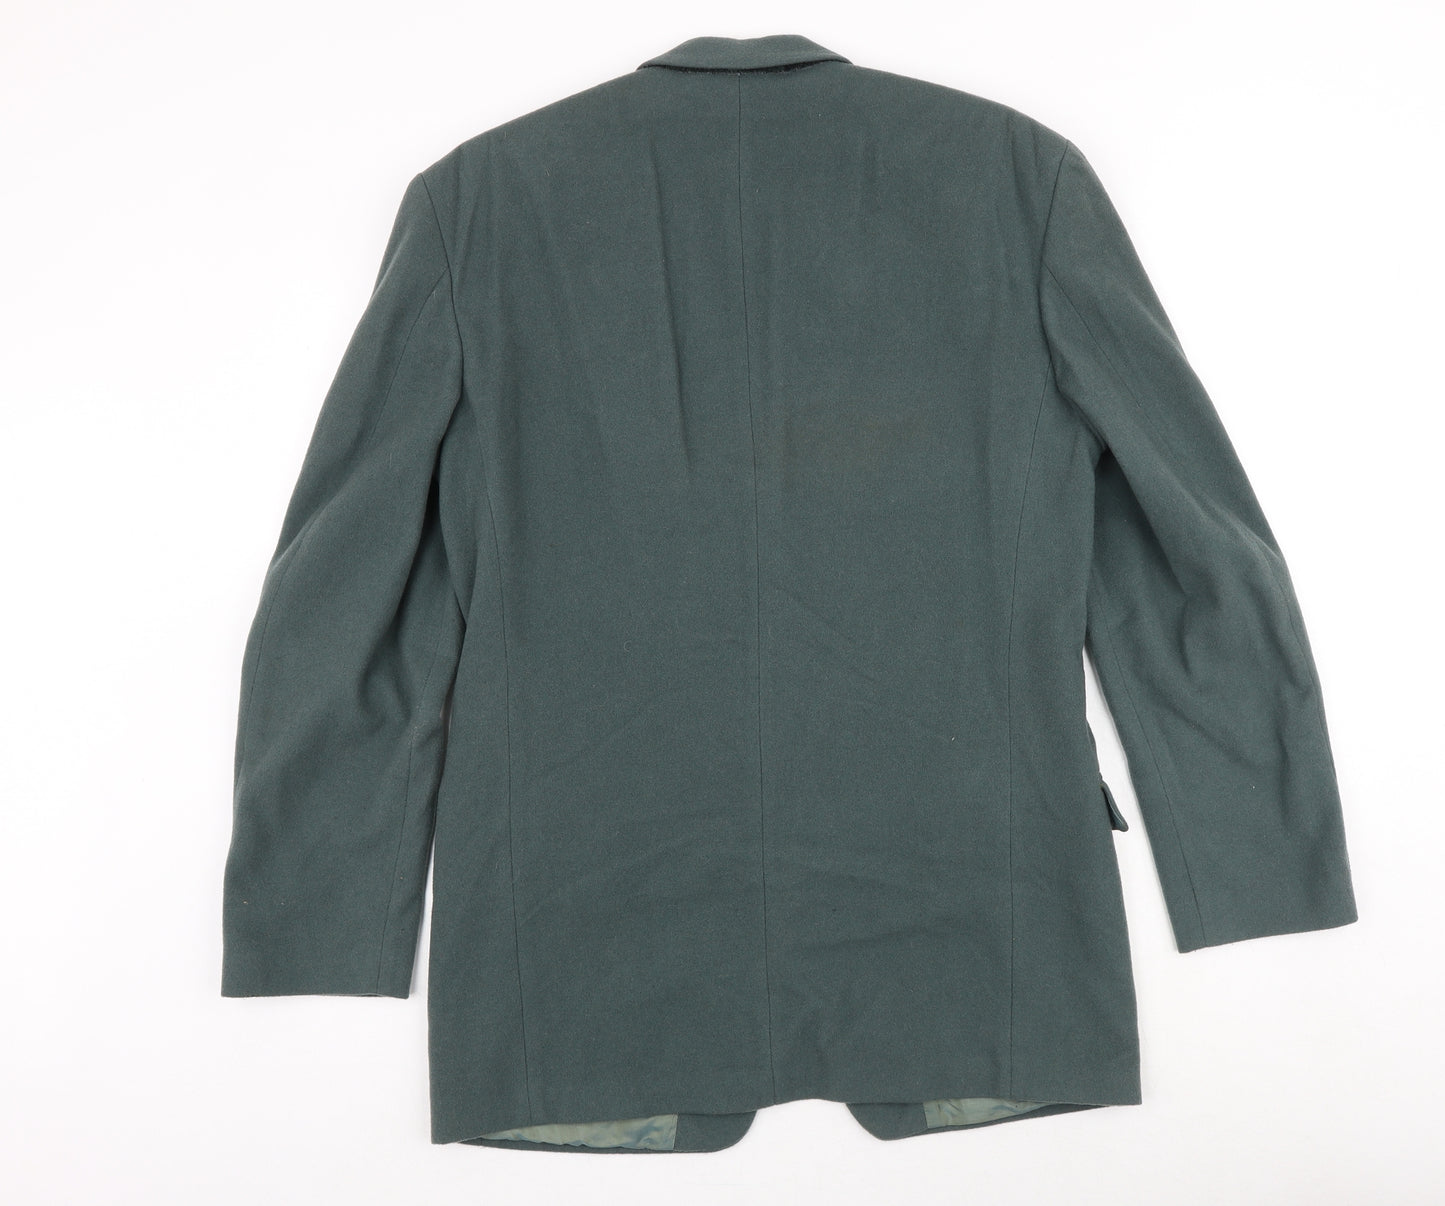 Marks and Spencer Mens Green Wool Jacket Suit Jacket Size 38 Regular